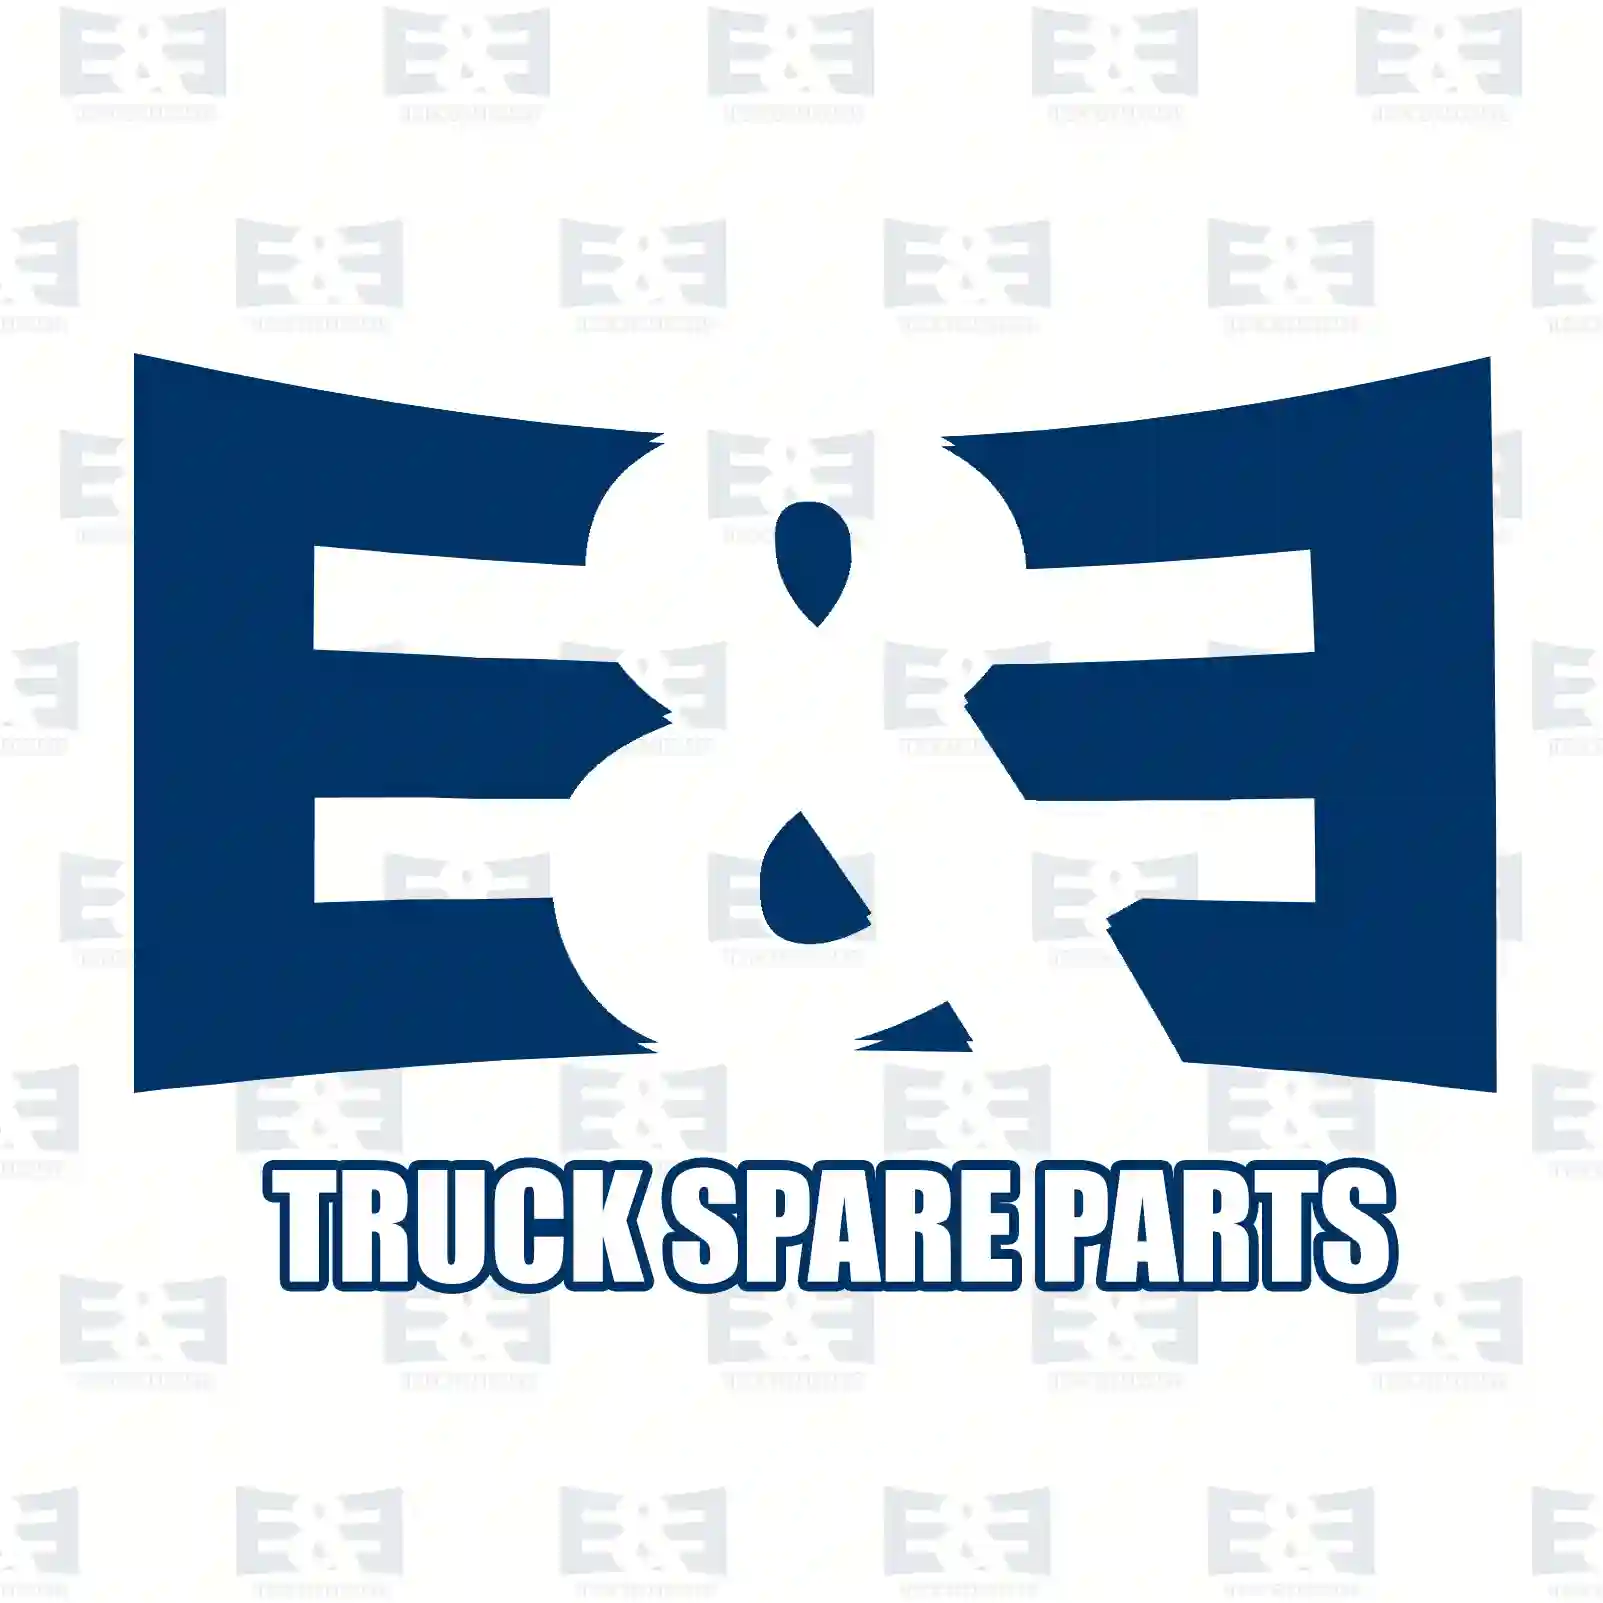  Exhaust Gas Recirculation Valve, exhaust gas recirculation, EE No 2E2200402 ,  oem no:1220819, 1333572, 2S7Q-9D475-AC, 2S7Q-9D475-AD, 14940, EGR102, ERV003 E&E Truck Spare Parts | Truck Spare Parts, Auotomotive Spare Parts